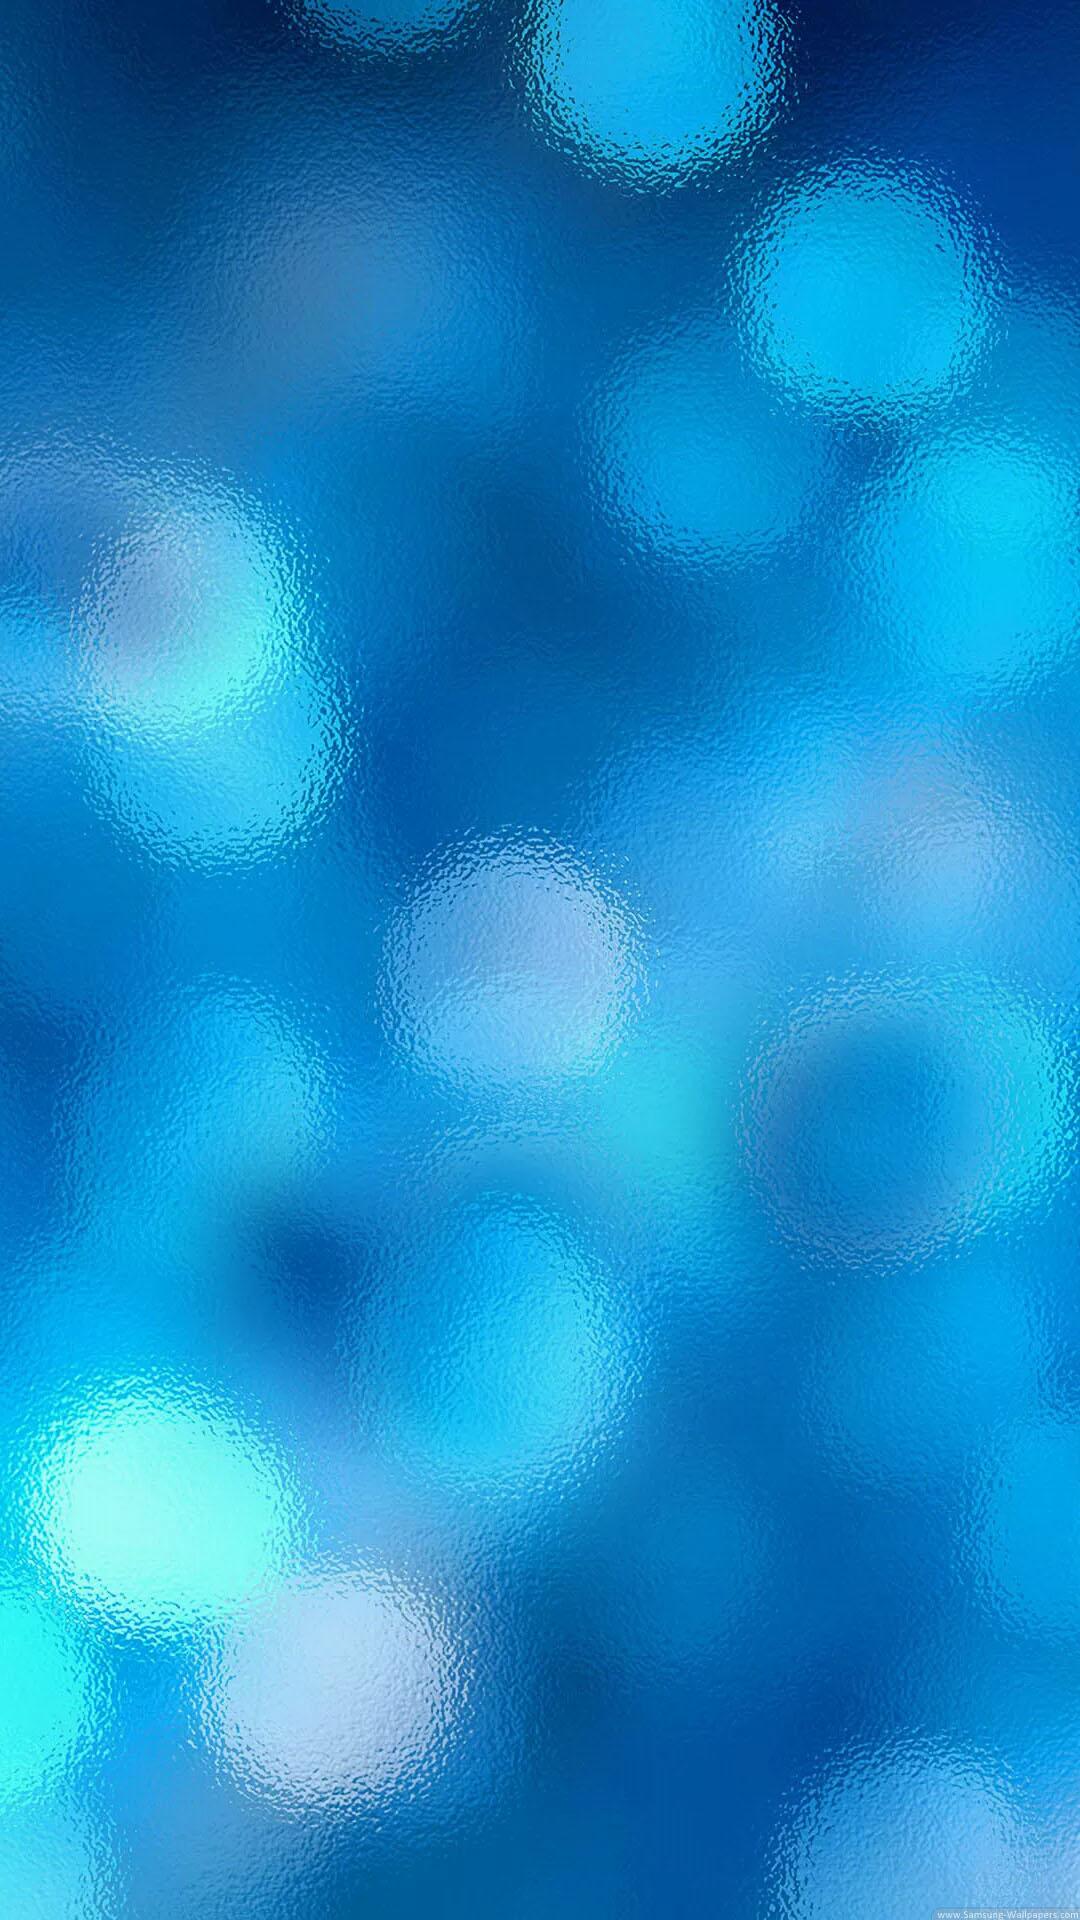 1080 x 1920 · jpeg - Download Blue Lock Screen Wallpaper Gallery